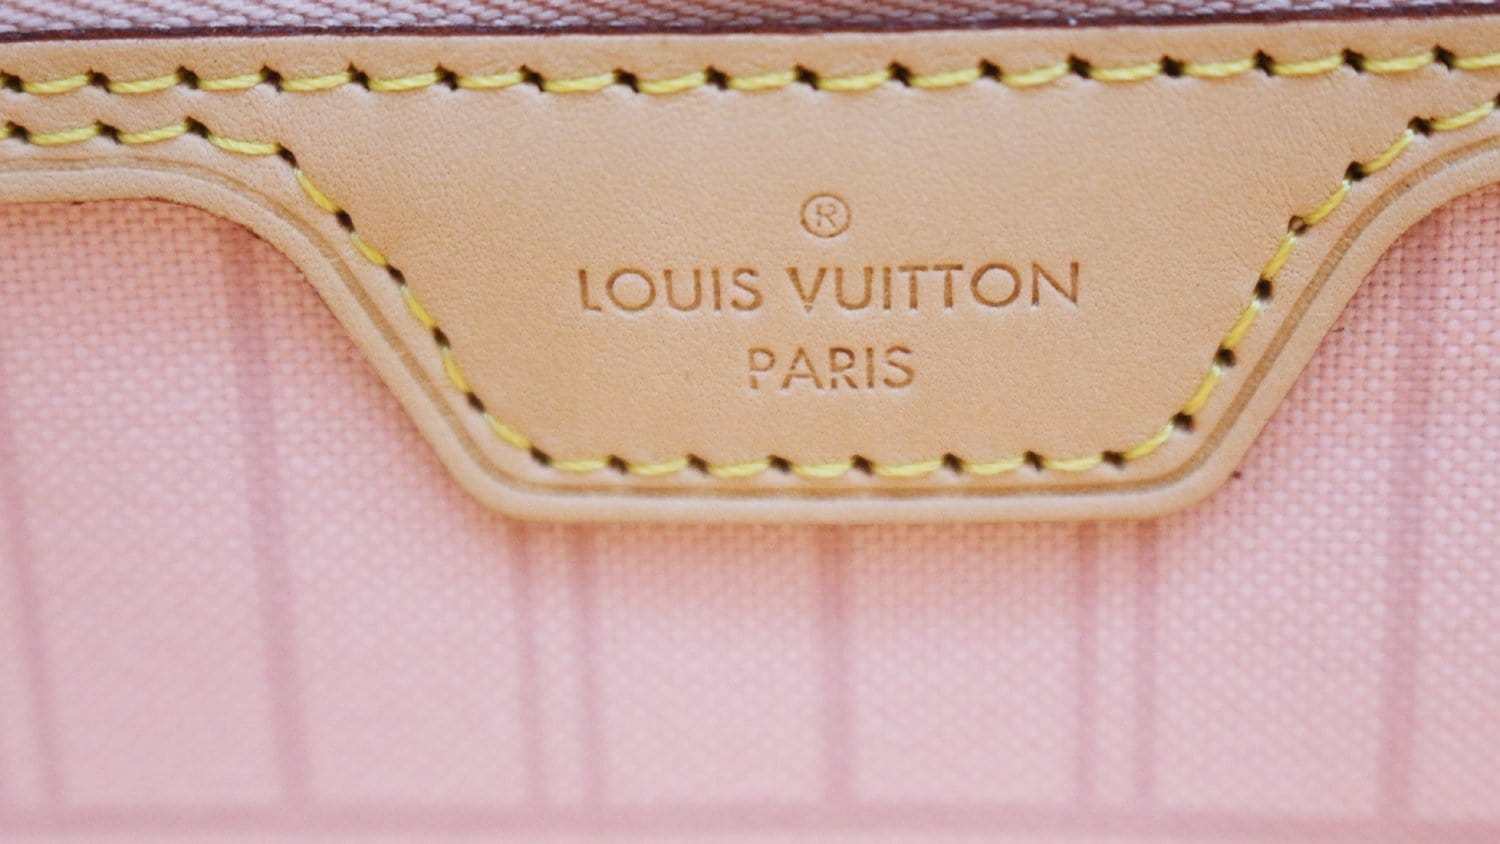 Louis Vuitton Damier Azur Tahitienne Neverfull Tote Bag